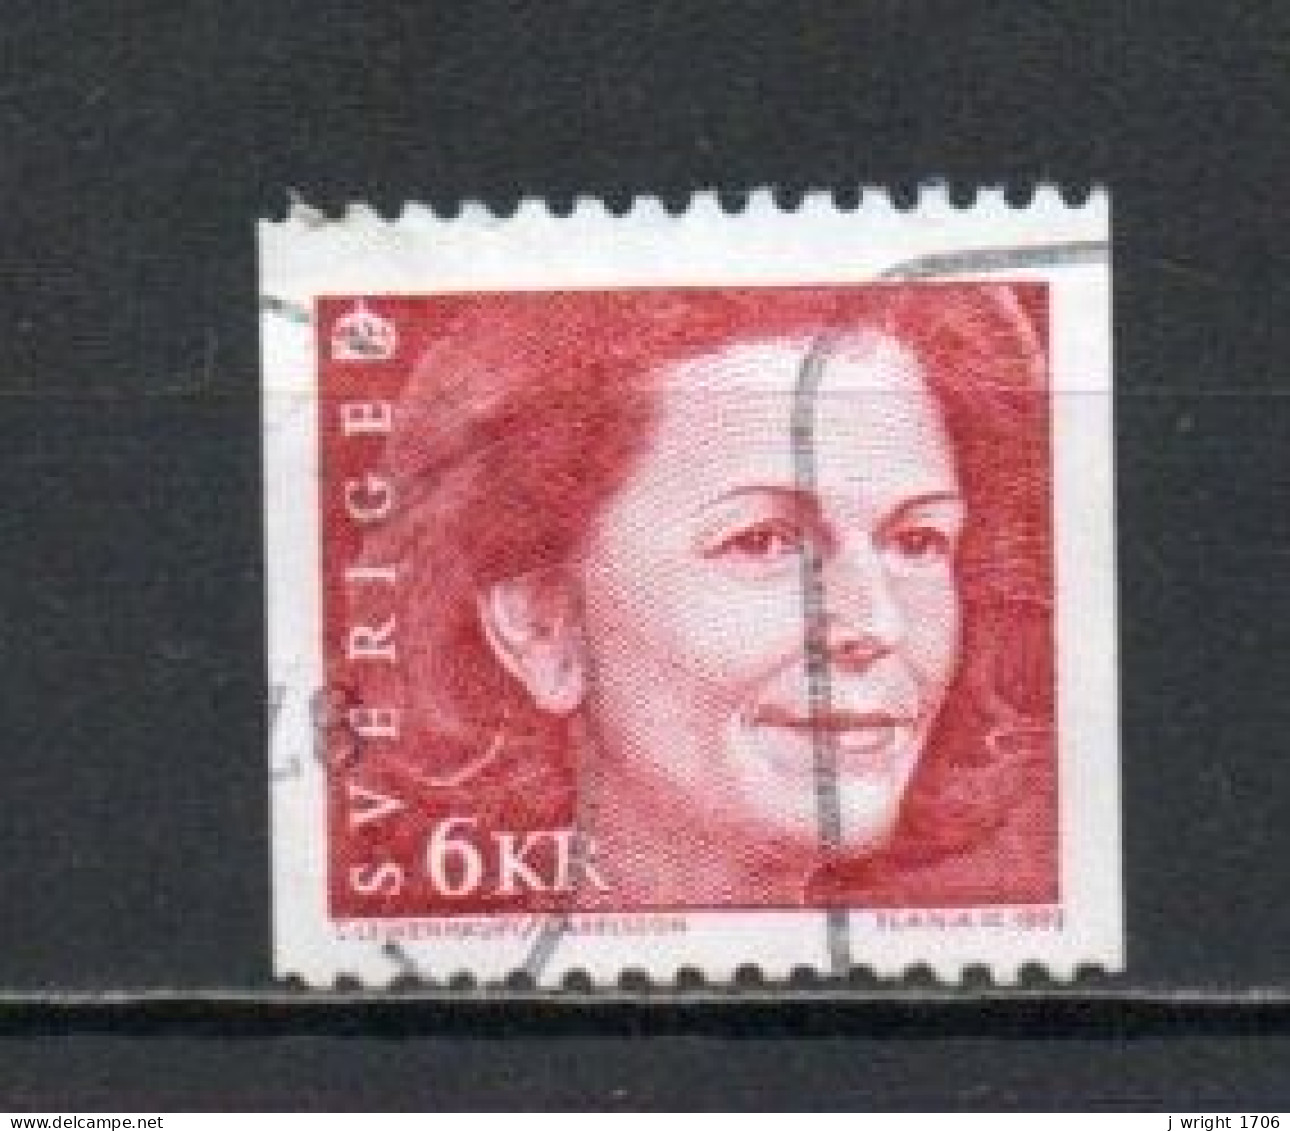 Sweden, 1993, Queen Silvia, 6kr, USED - Usati